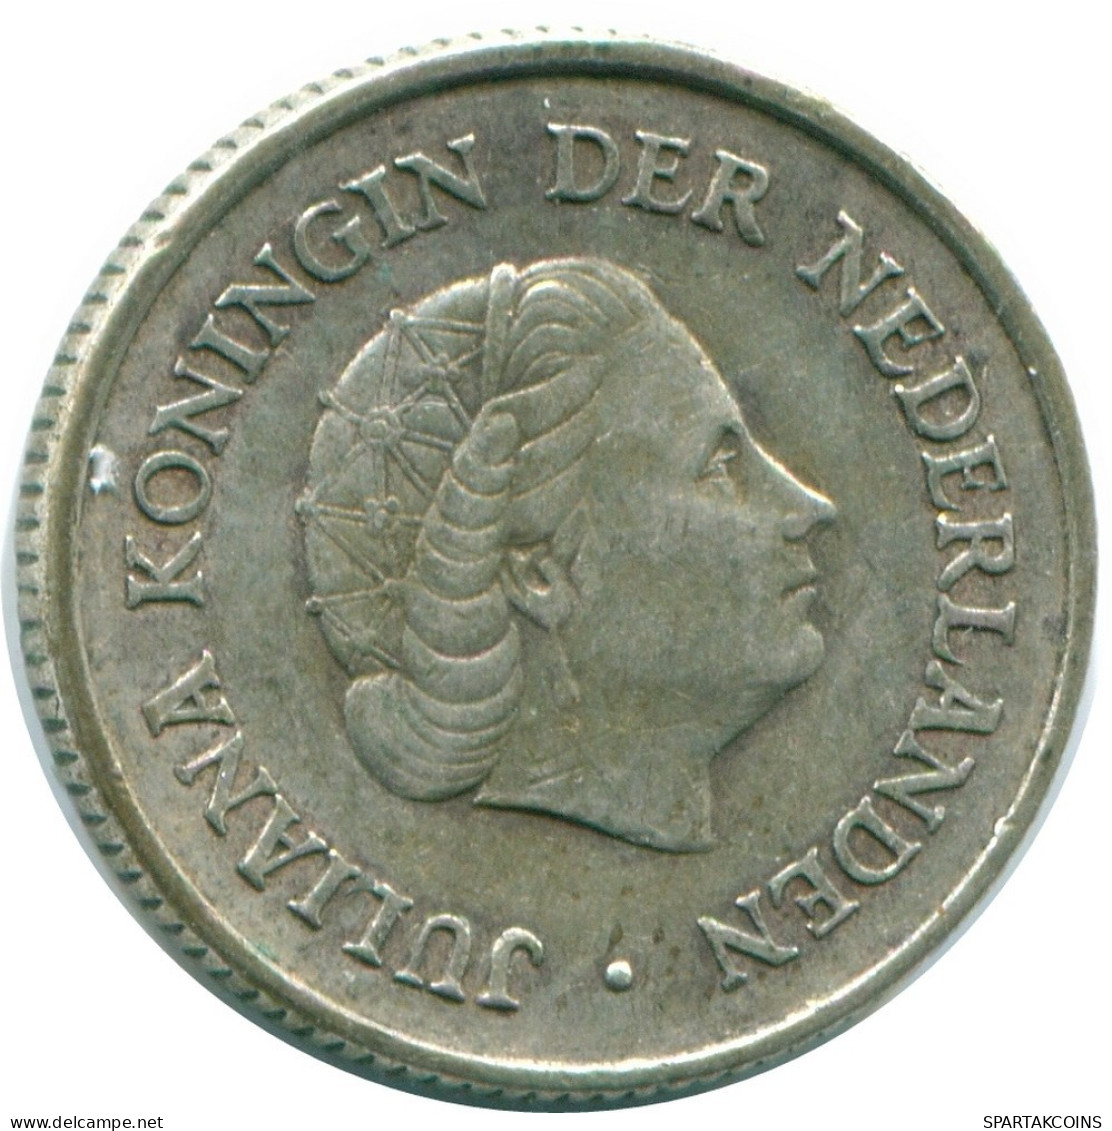 1/4 GULDEN 1965 NETHERLANDS ANTILLES SILVER Colonial Coin #NL11385.4.U.A - Netherlands Antilles